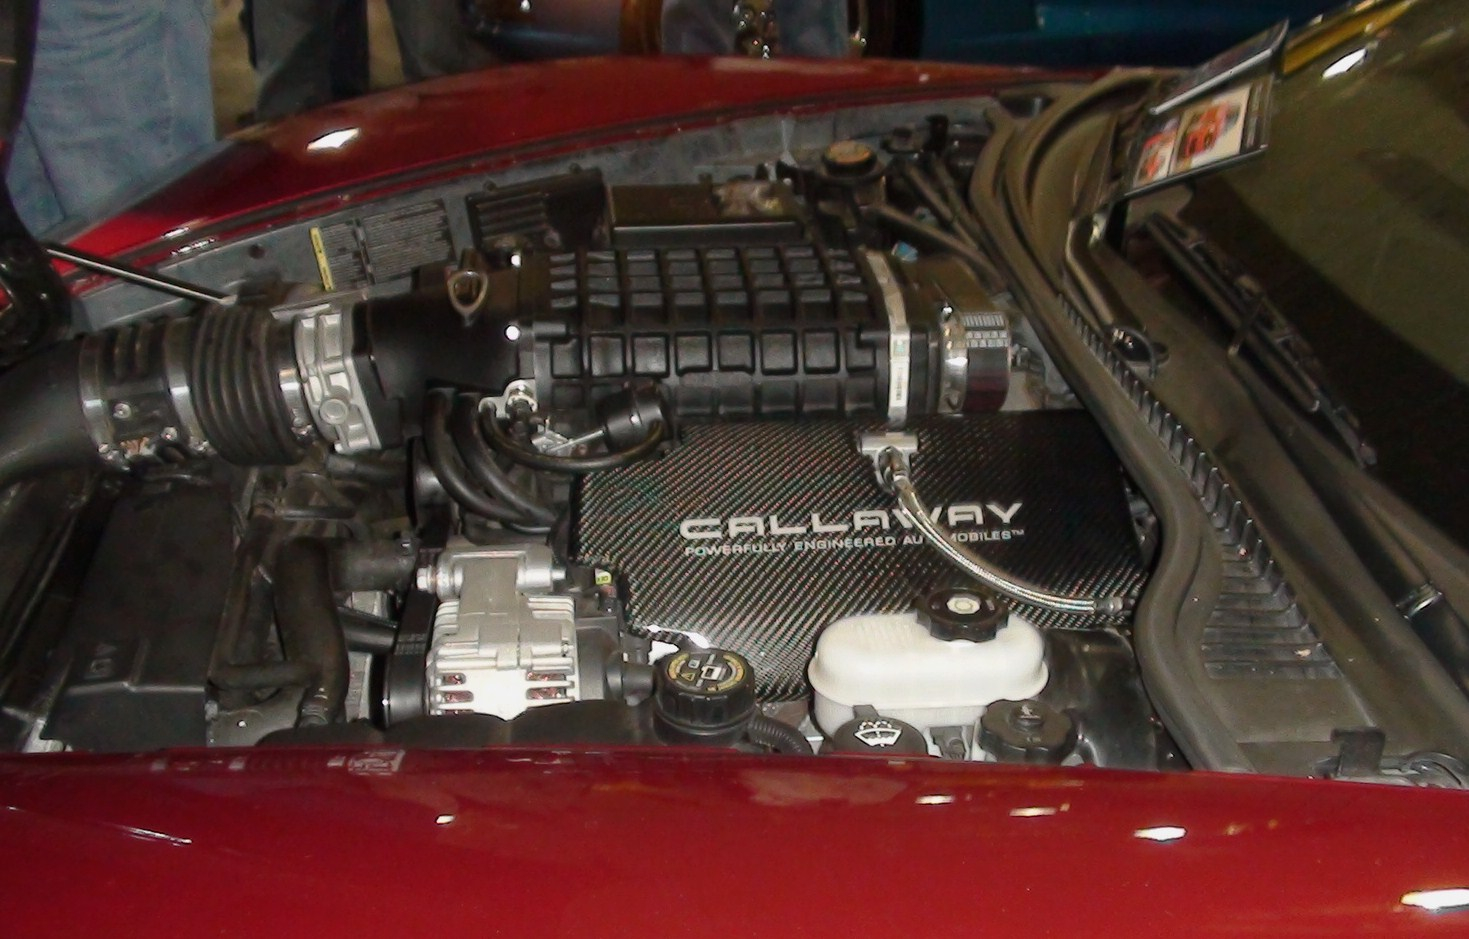 General Motors Ls-Based Small-Block Engine - Wikipedia